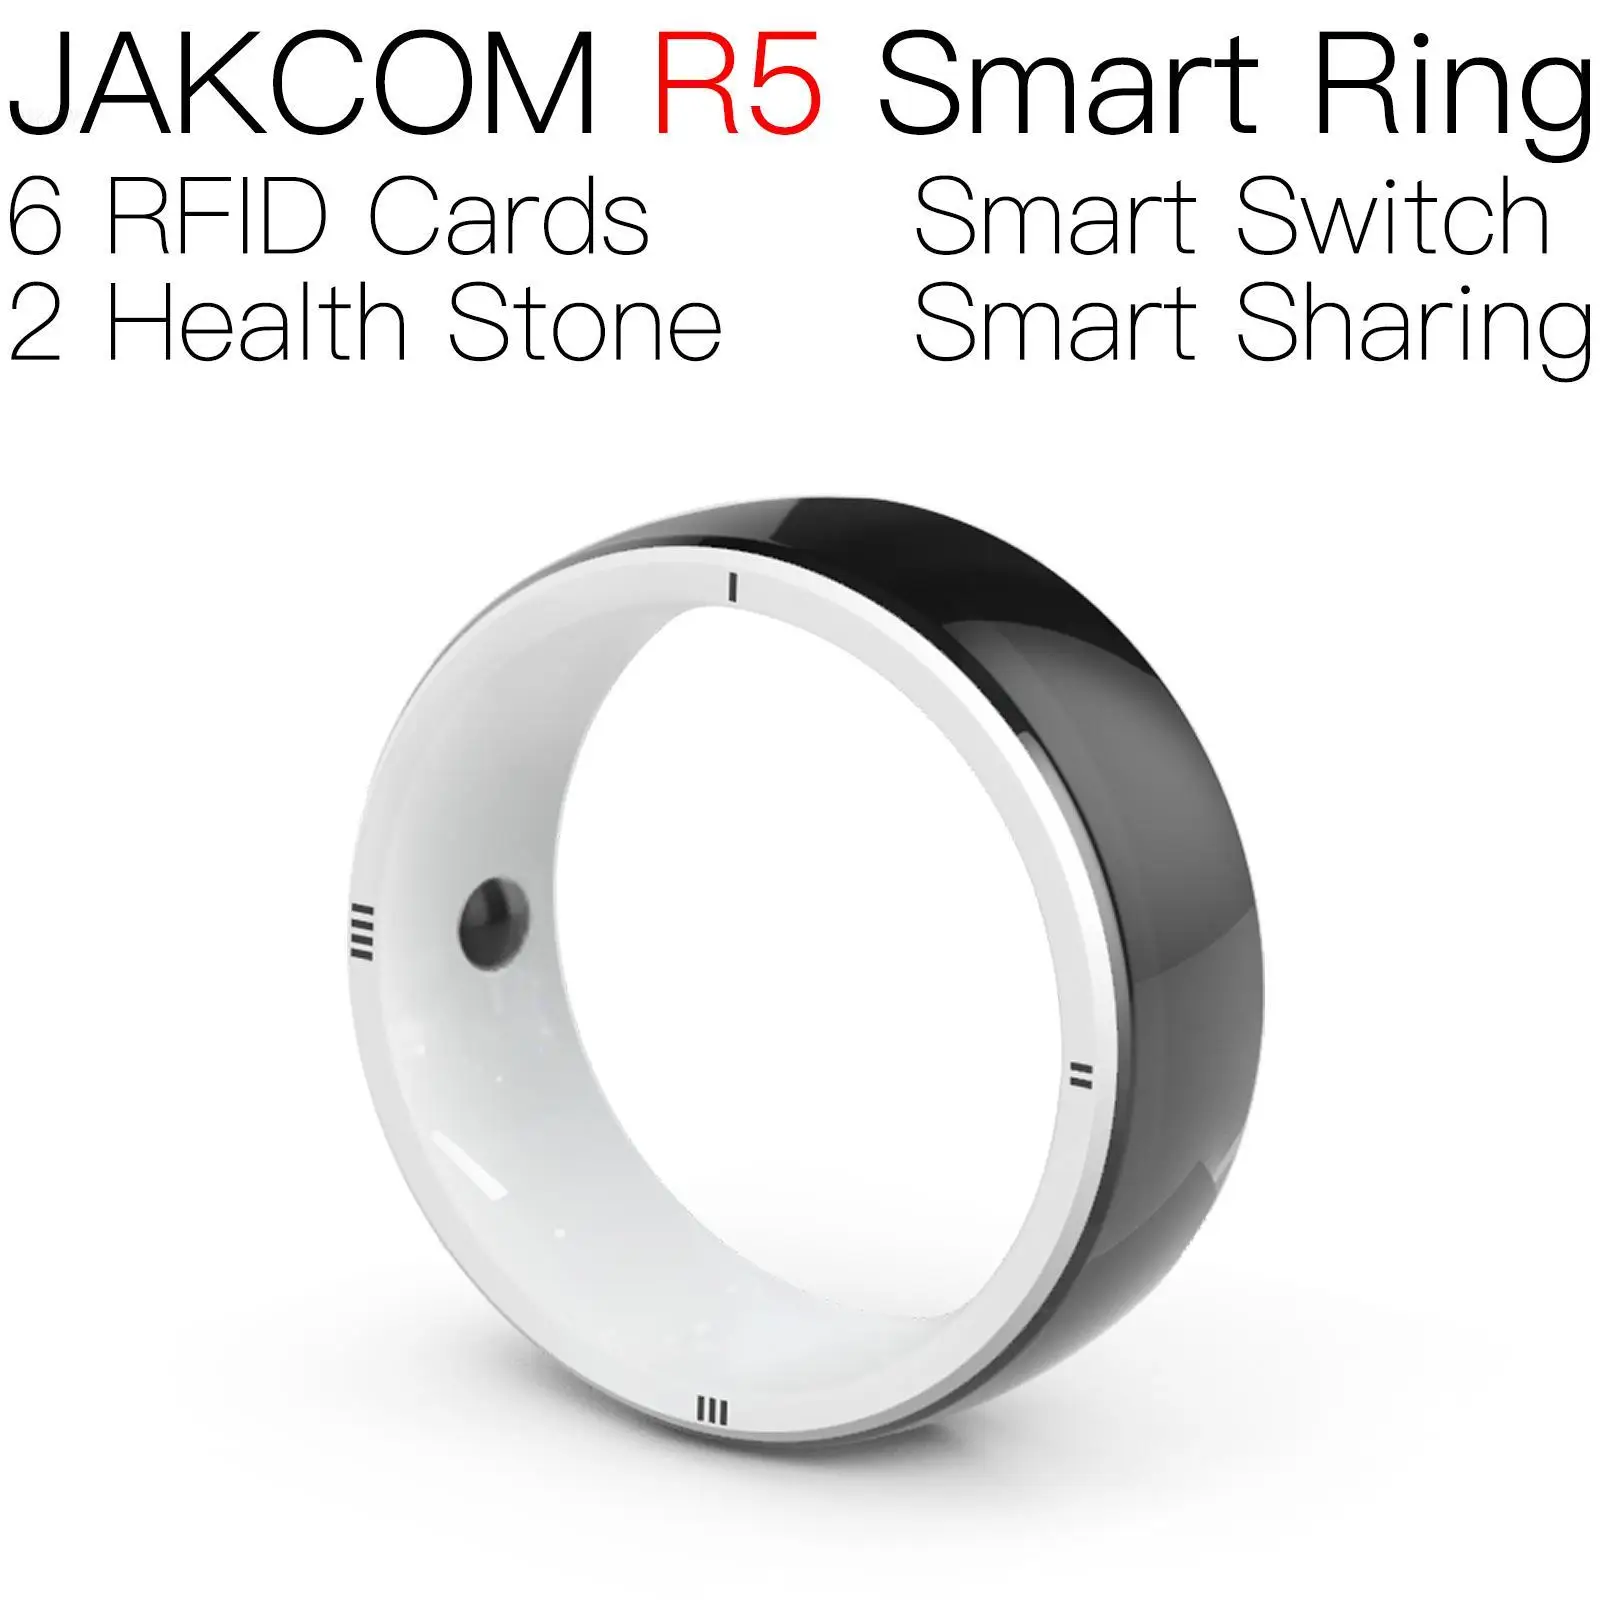 

JAKCOM R5 Smart Ring Newer than syringe rfid cloner long range id nfc tag social media active t5577 uid 5mm 125 lable